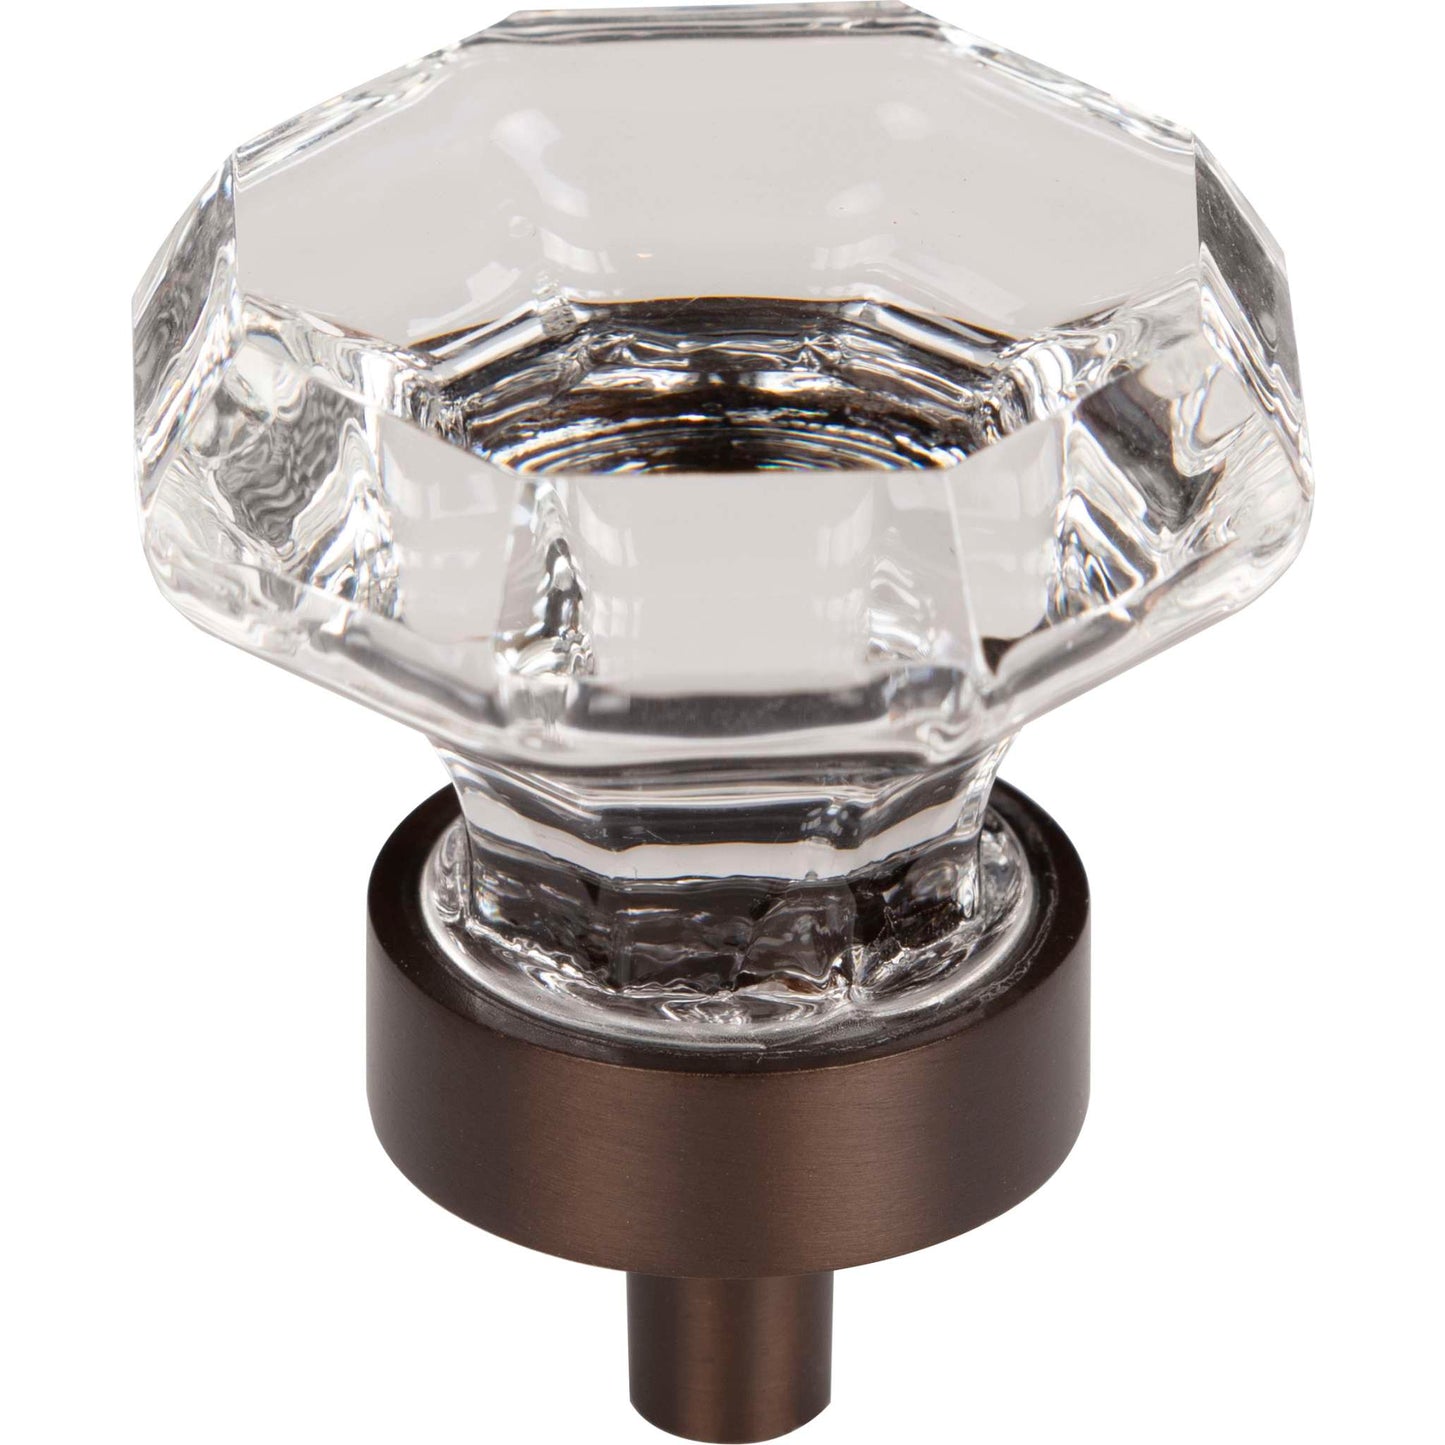 Top Knobs - Clear Octagon Crystal Knob